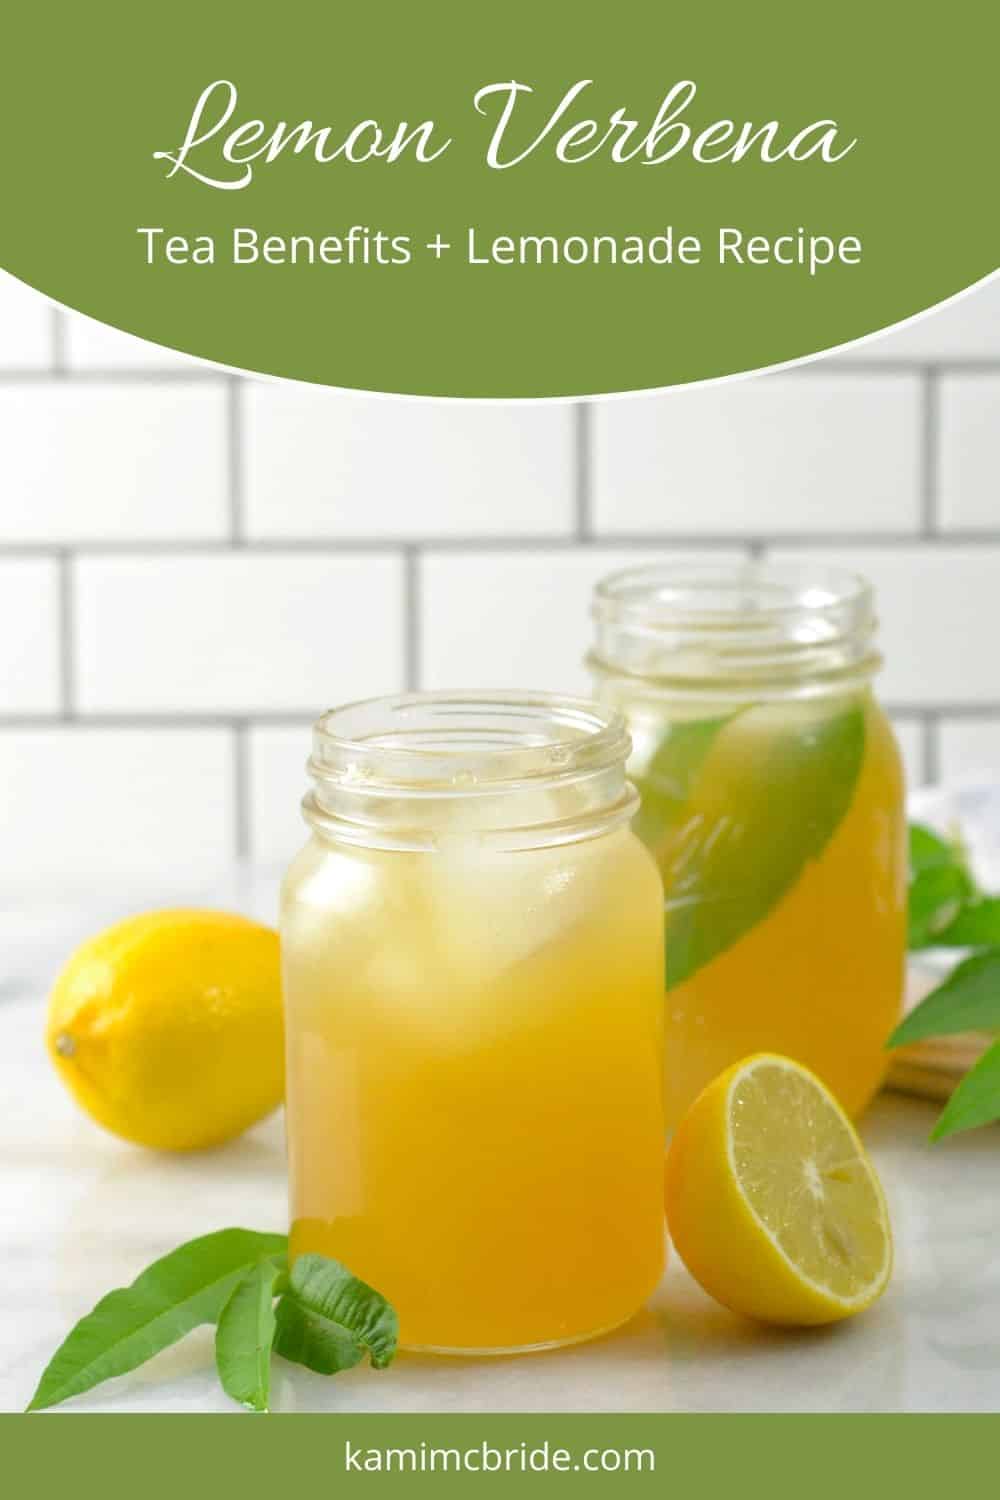 Lemon Verbena One Sheet: Everything You Need To Know